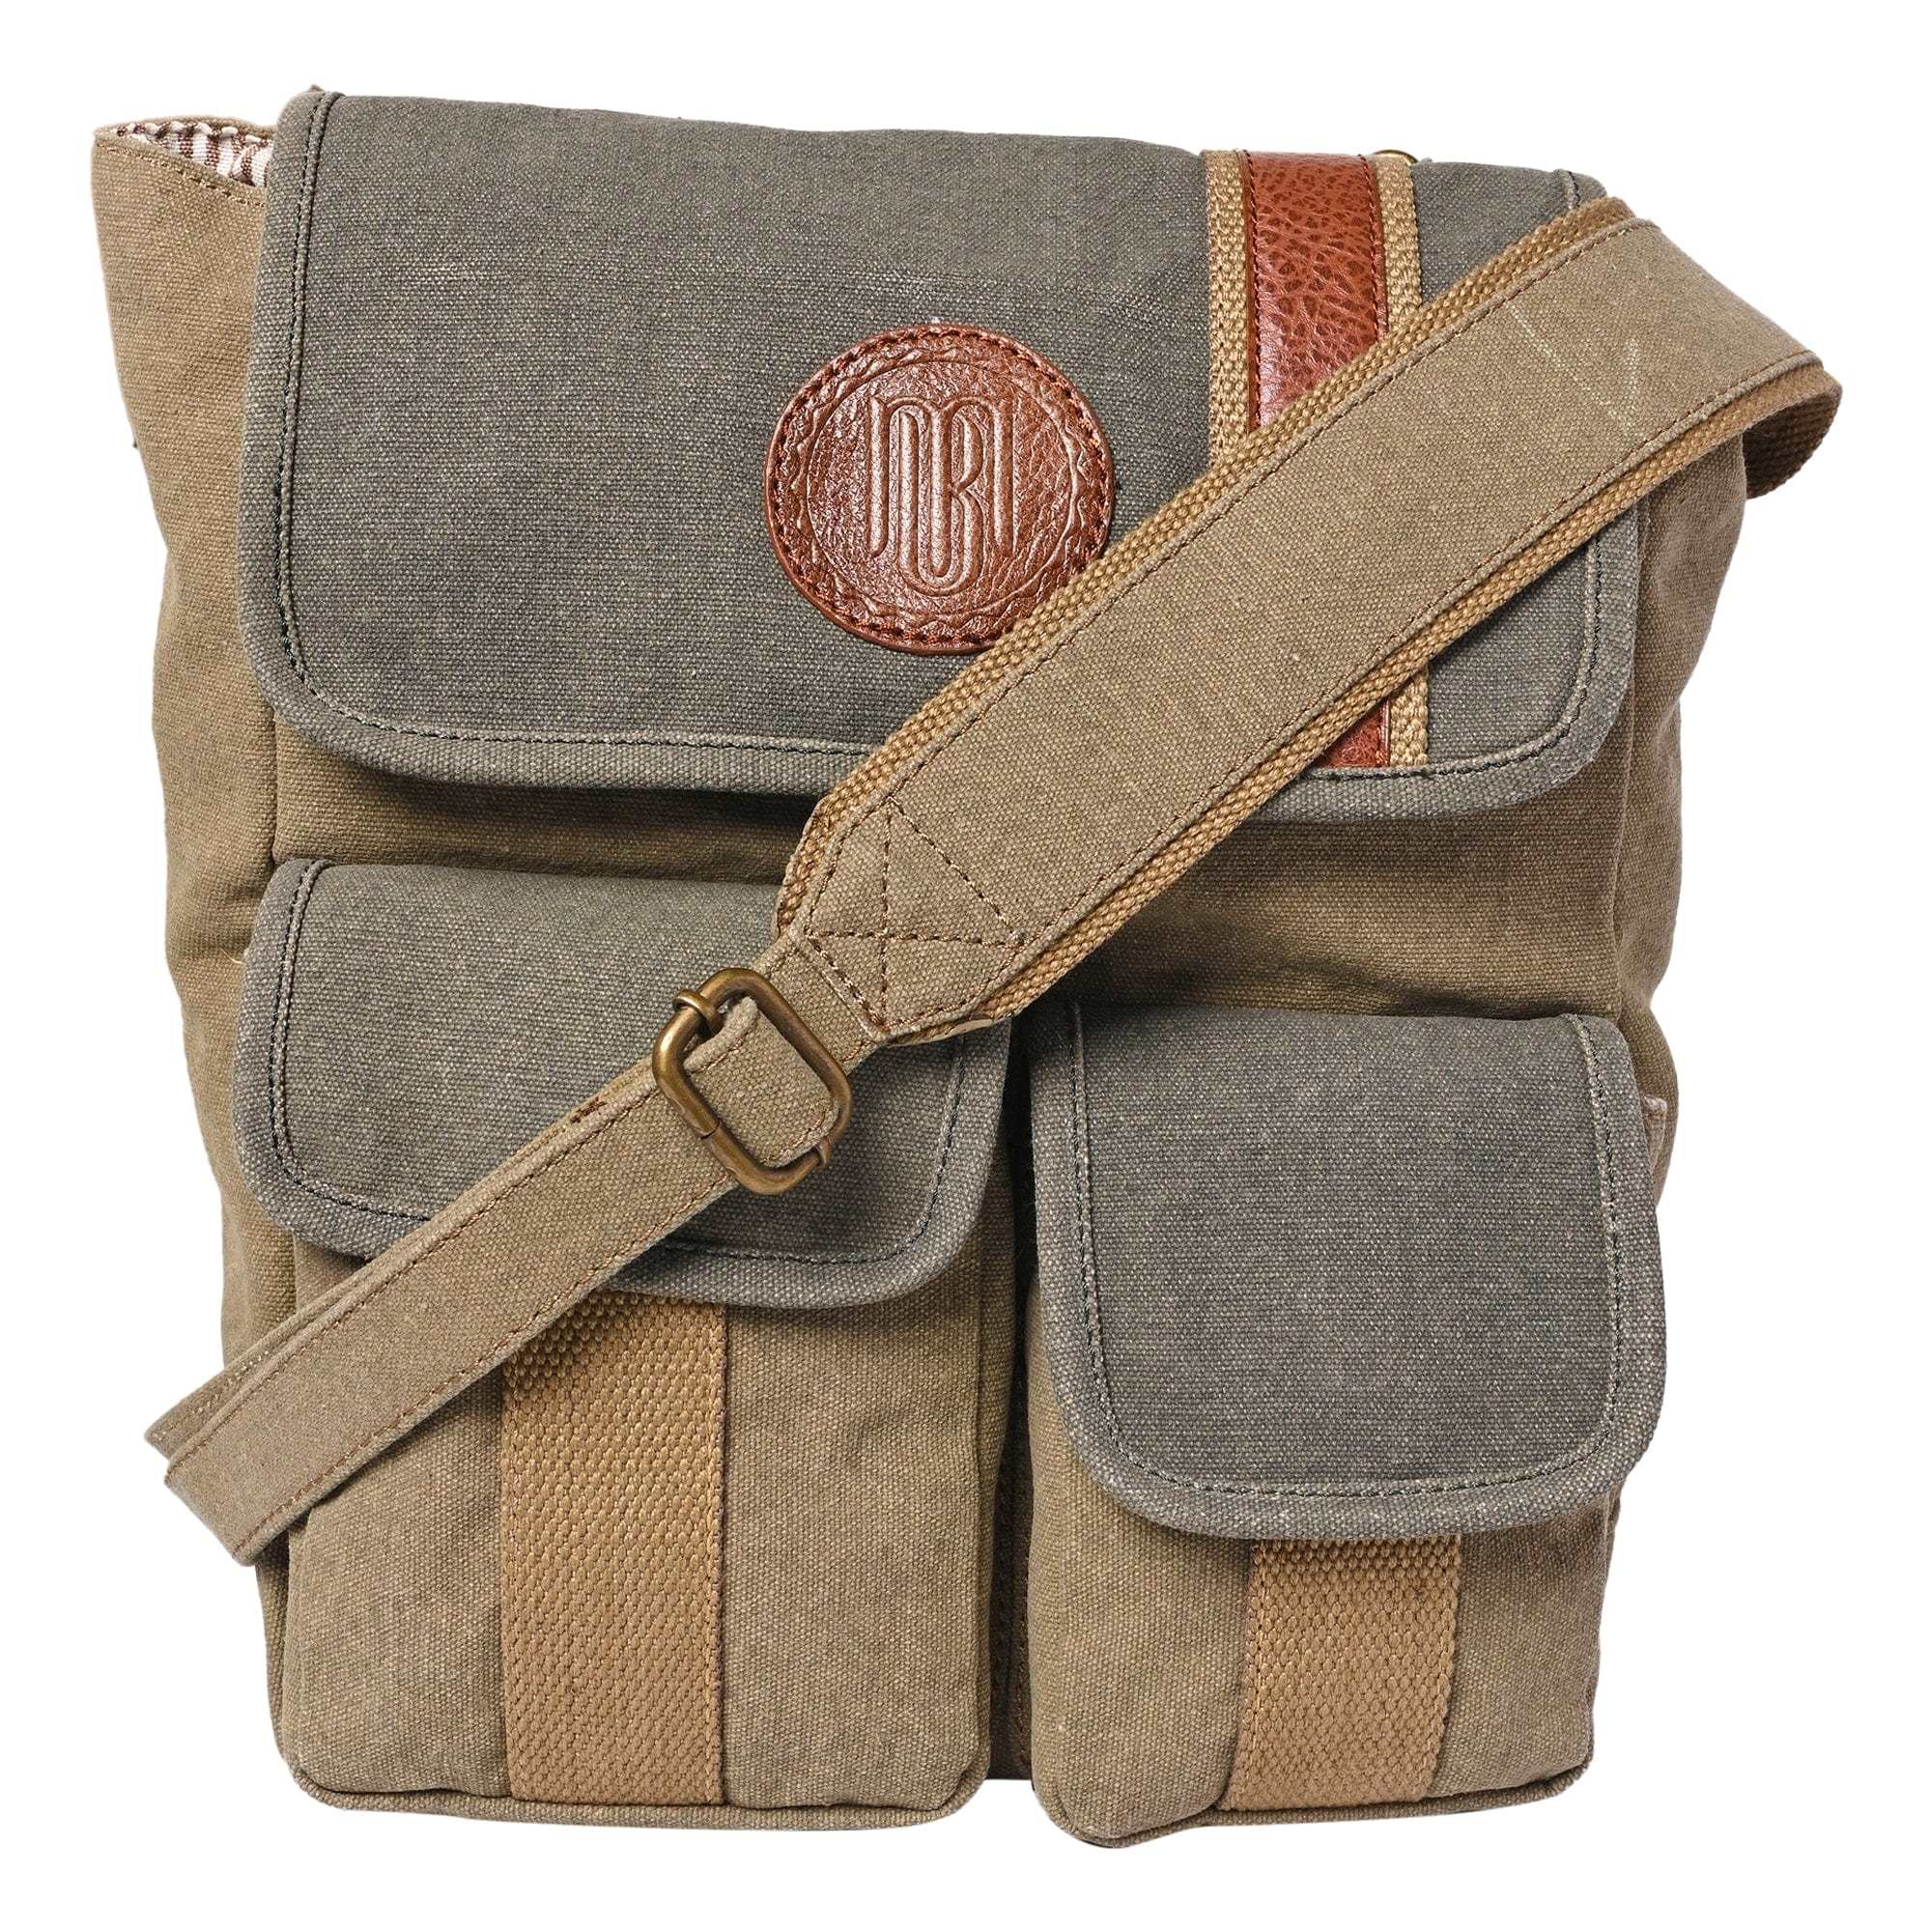 Mona-B Bag Mona B - Stone 100% Cotton Canvas Messenger Crossbody Bag with Stylish Design for Men and Women Multi Coloured